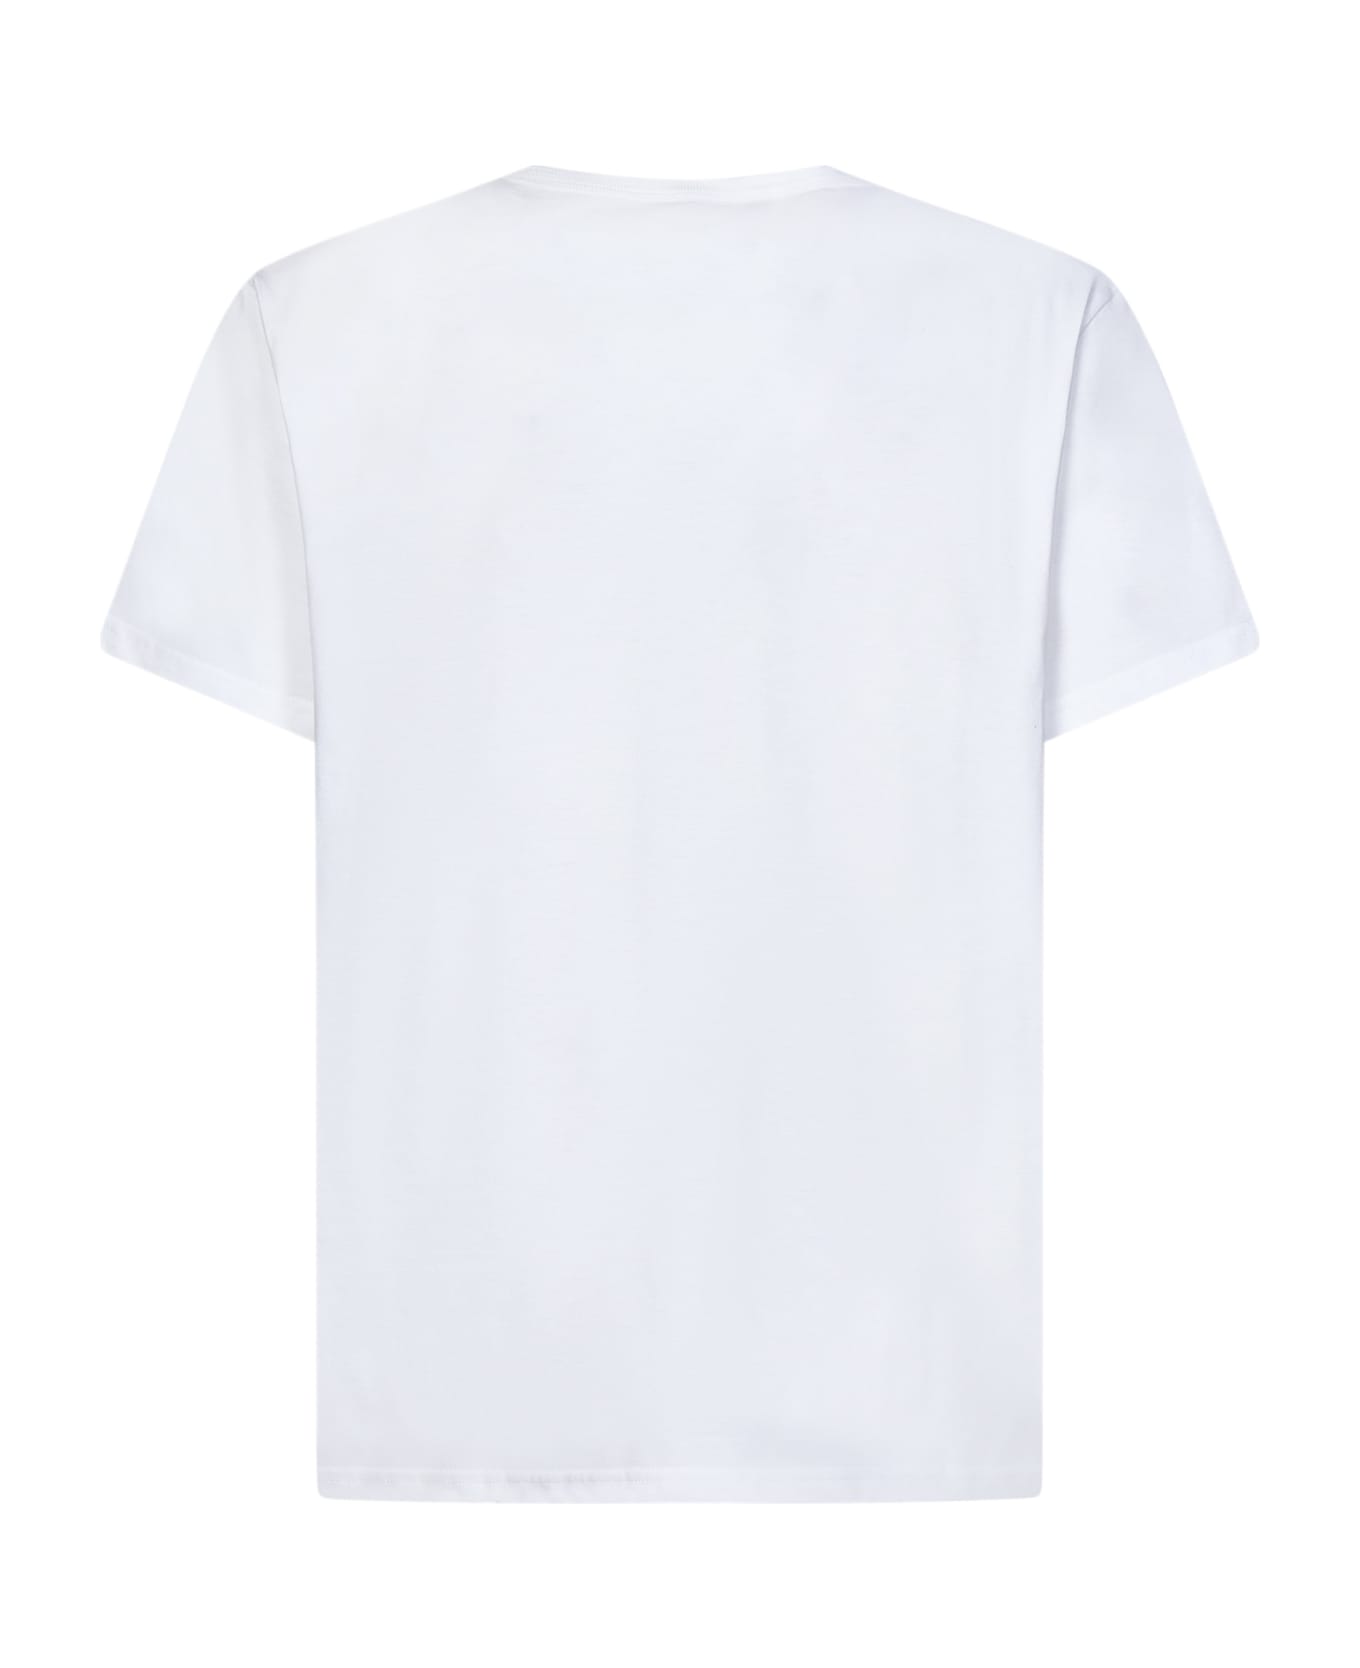 Alexander McQueen Dragonfly T-shirt - White